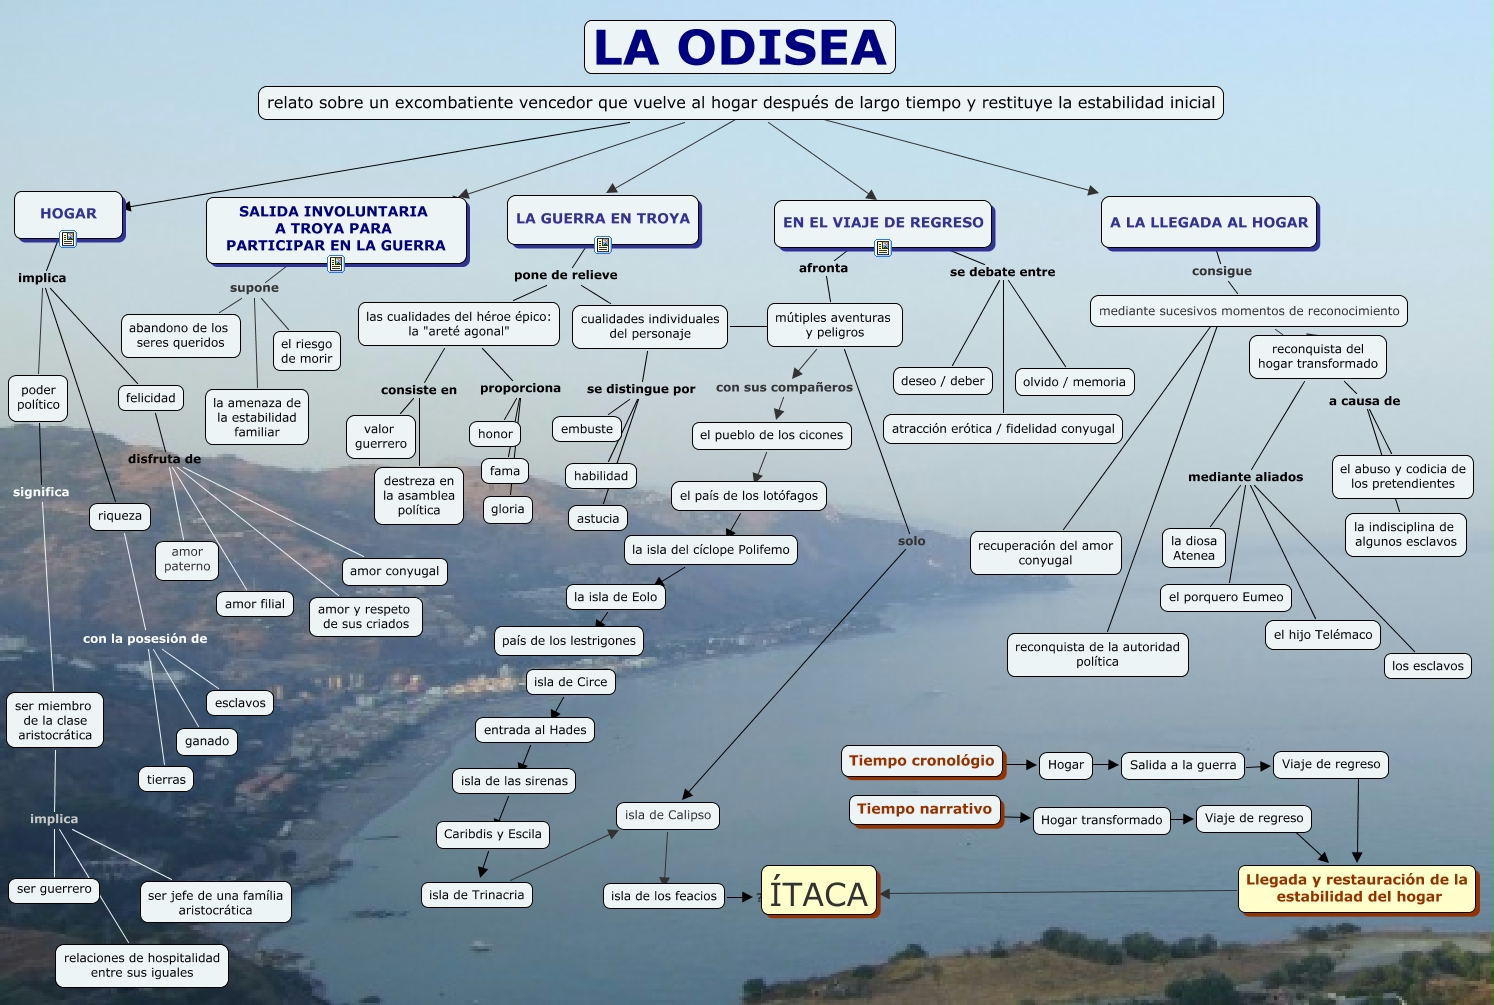 La Odisea - Esquema narrativo de la Odisea